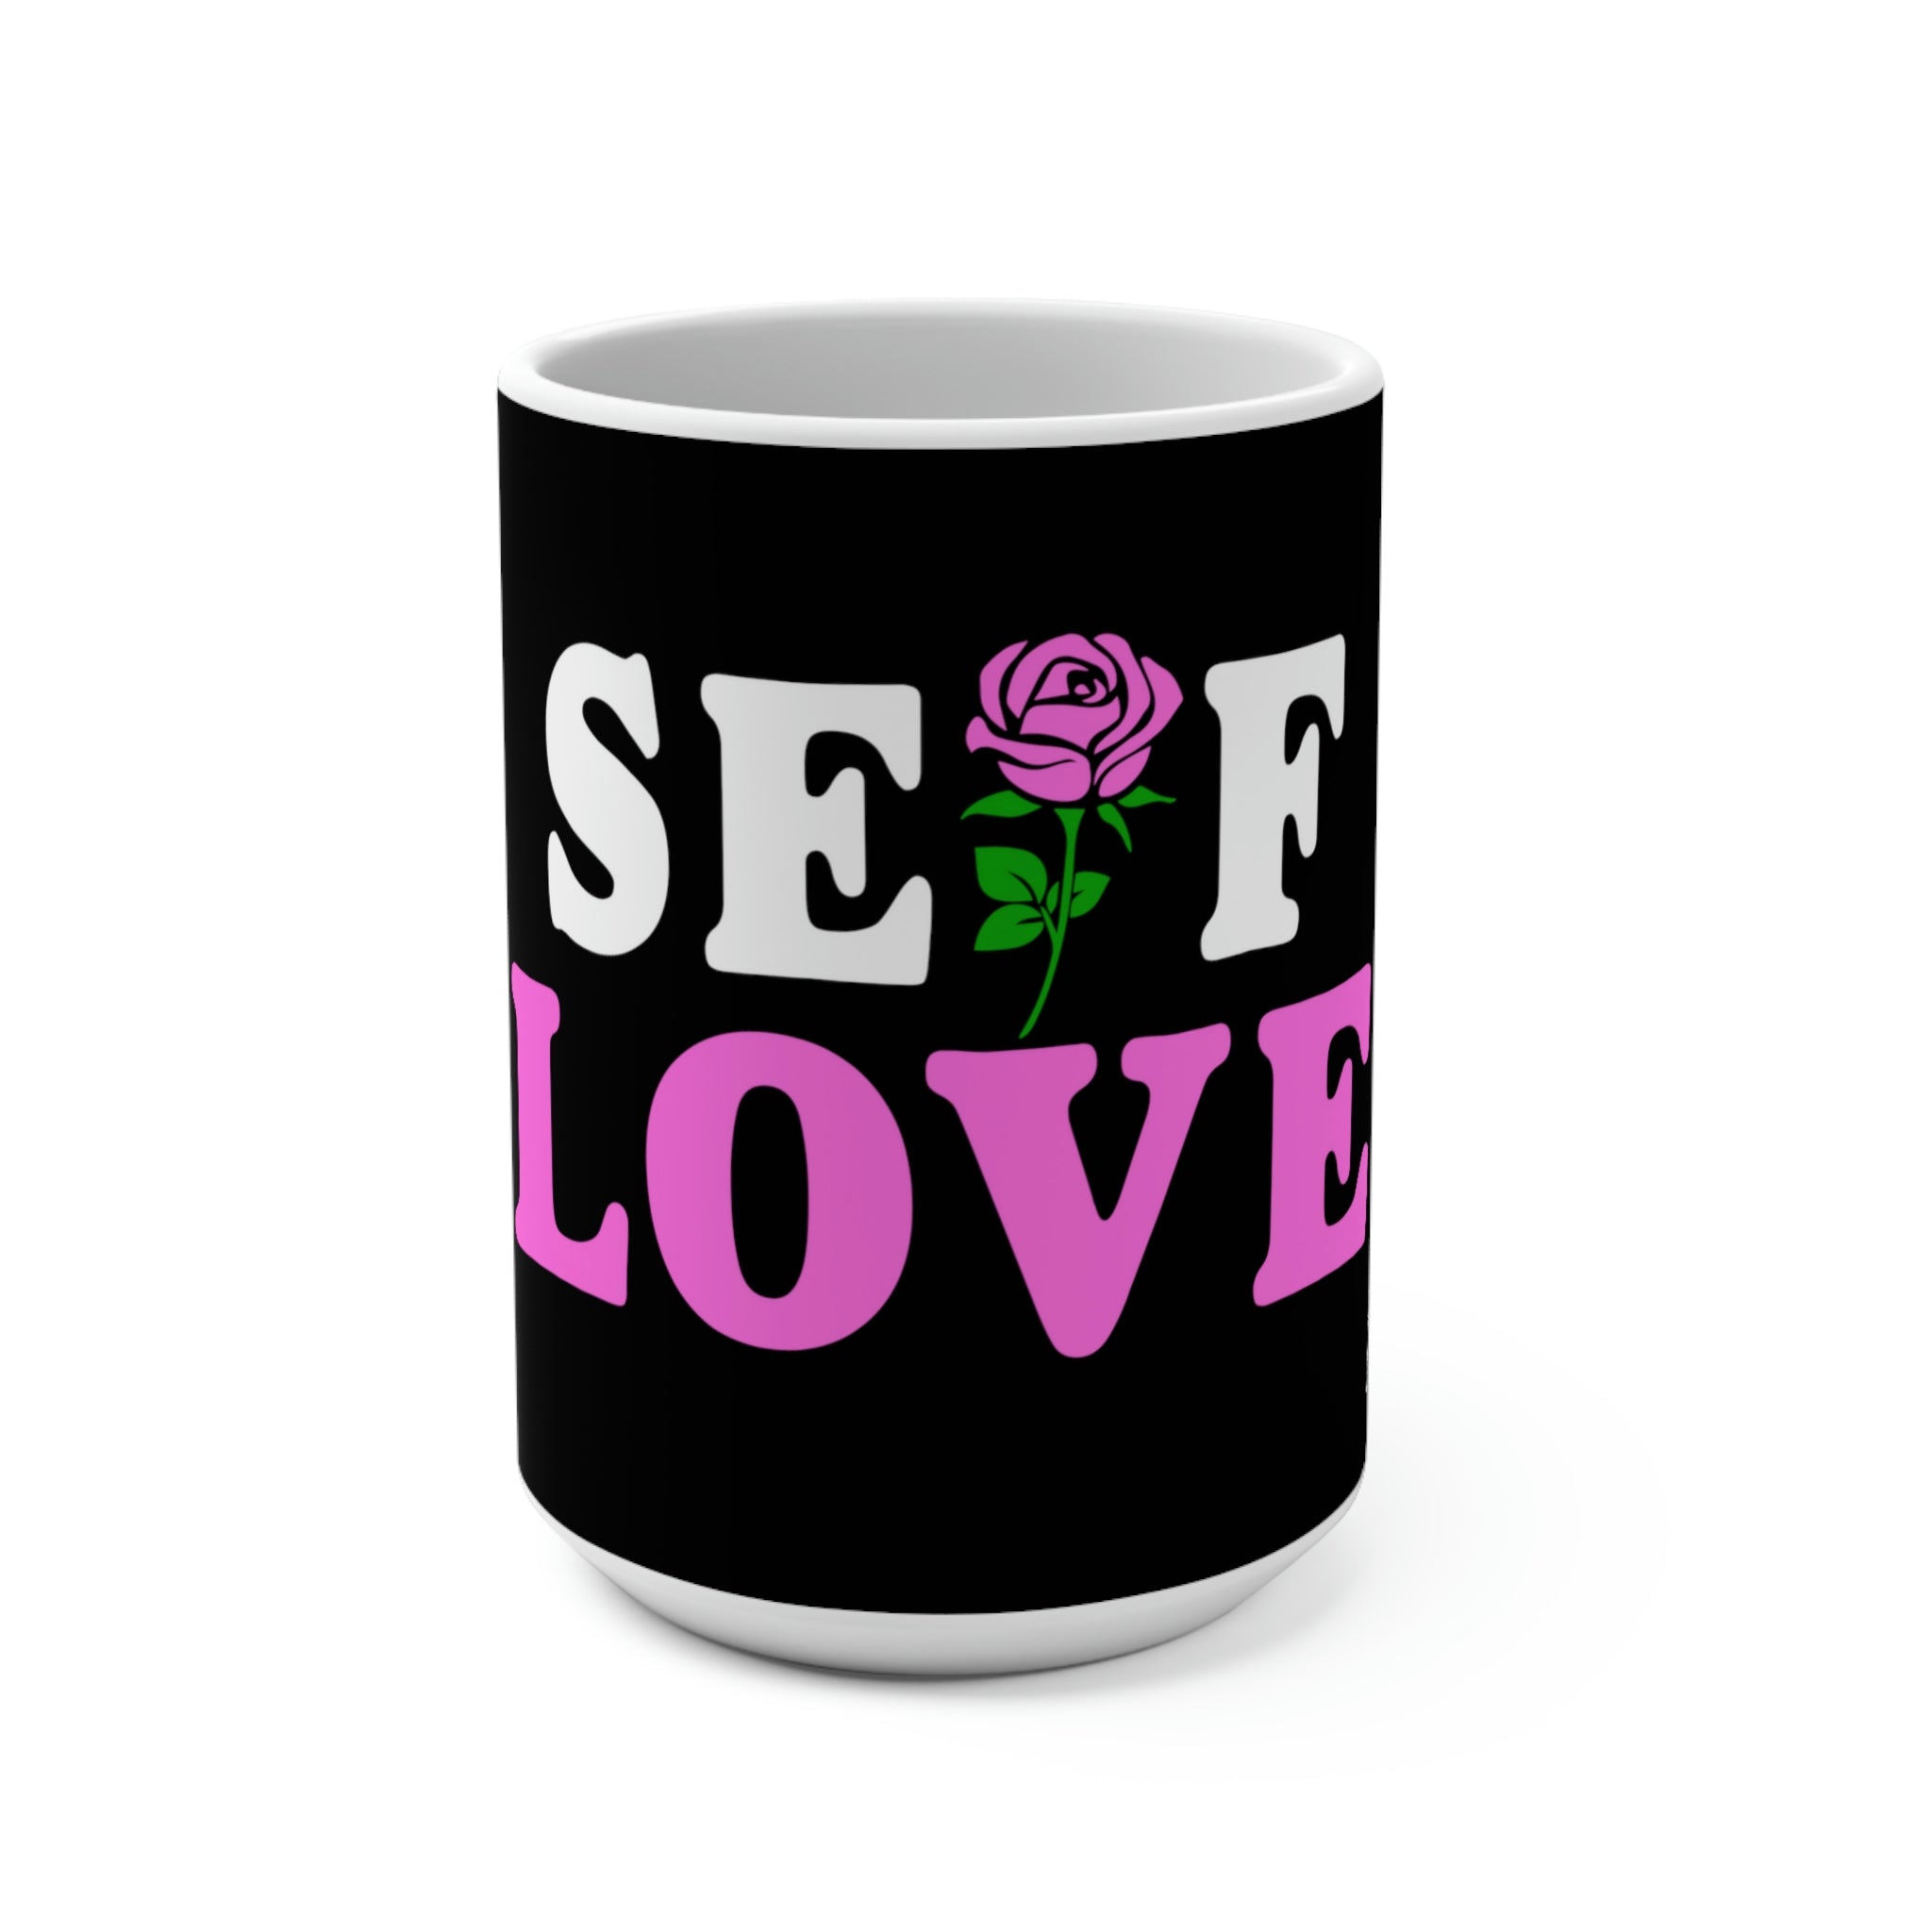 Self Love Mug 15oz - Meraki Daydream